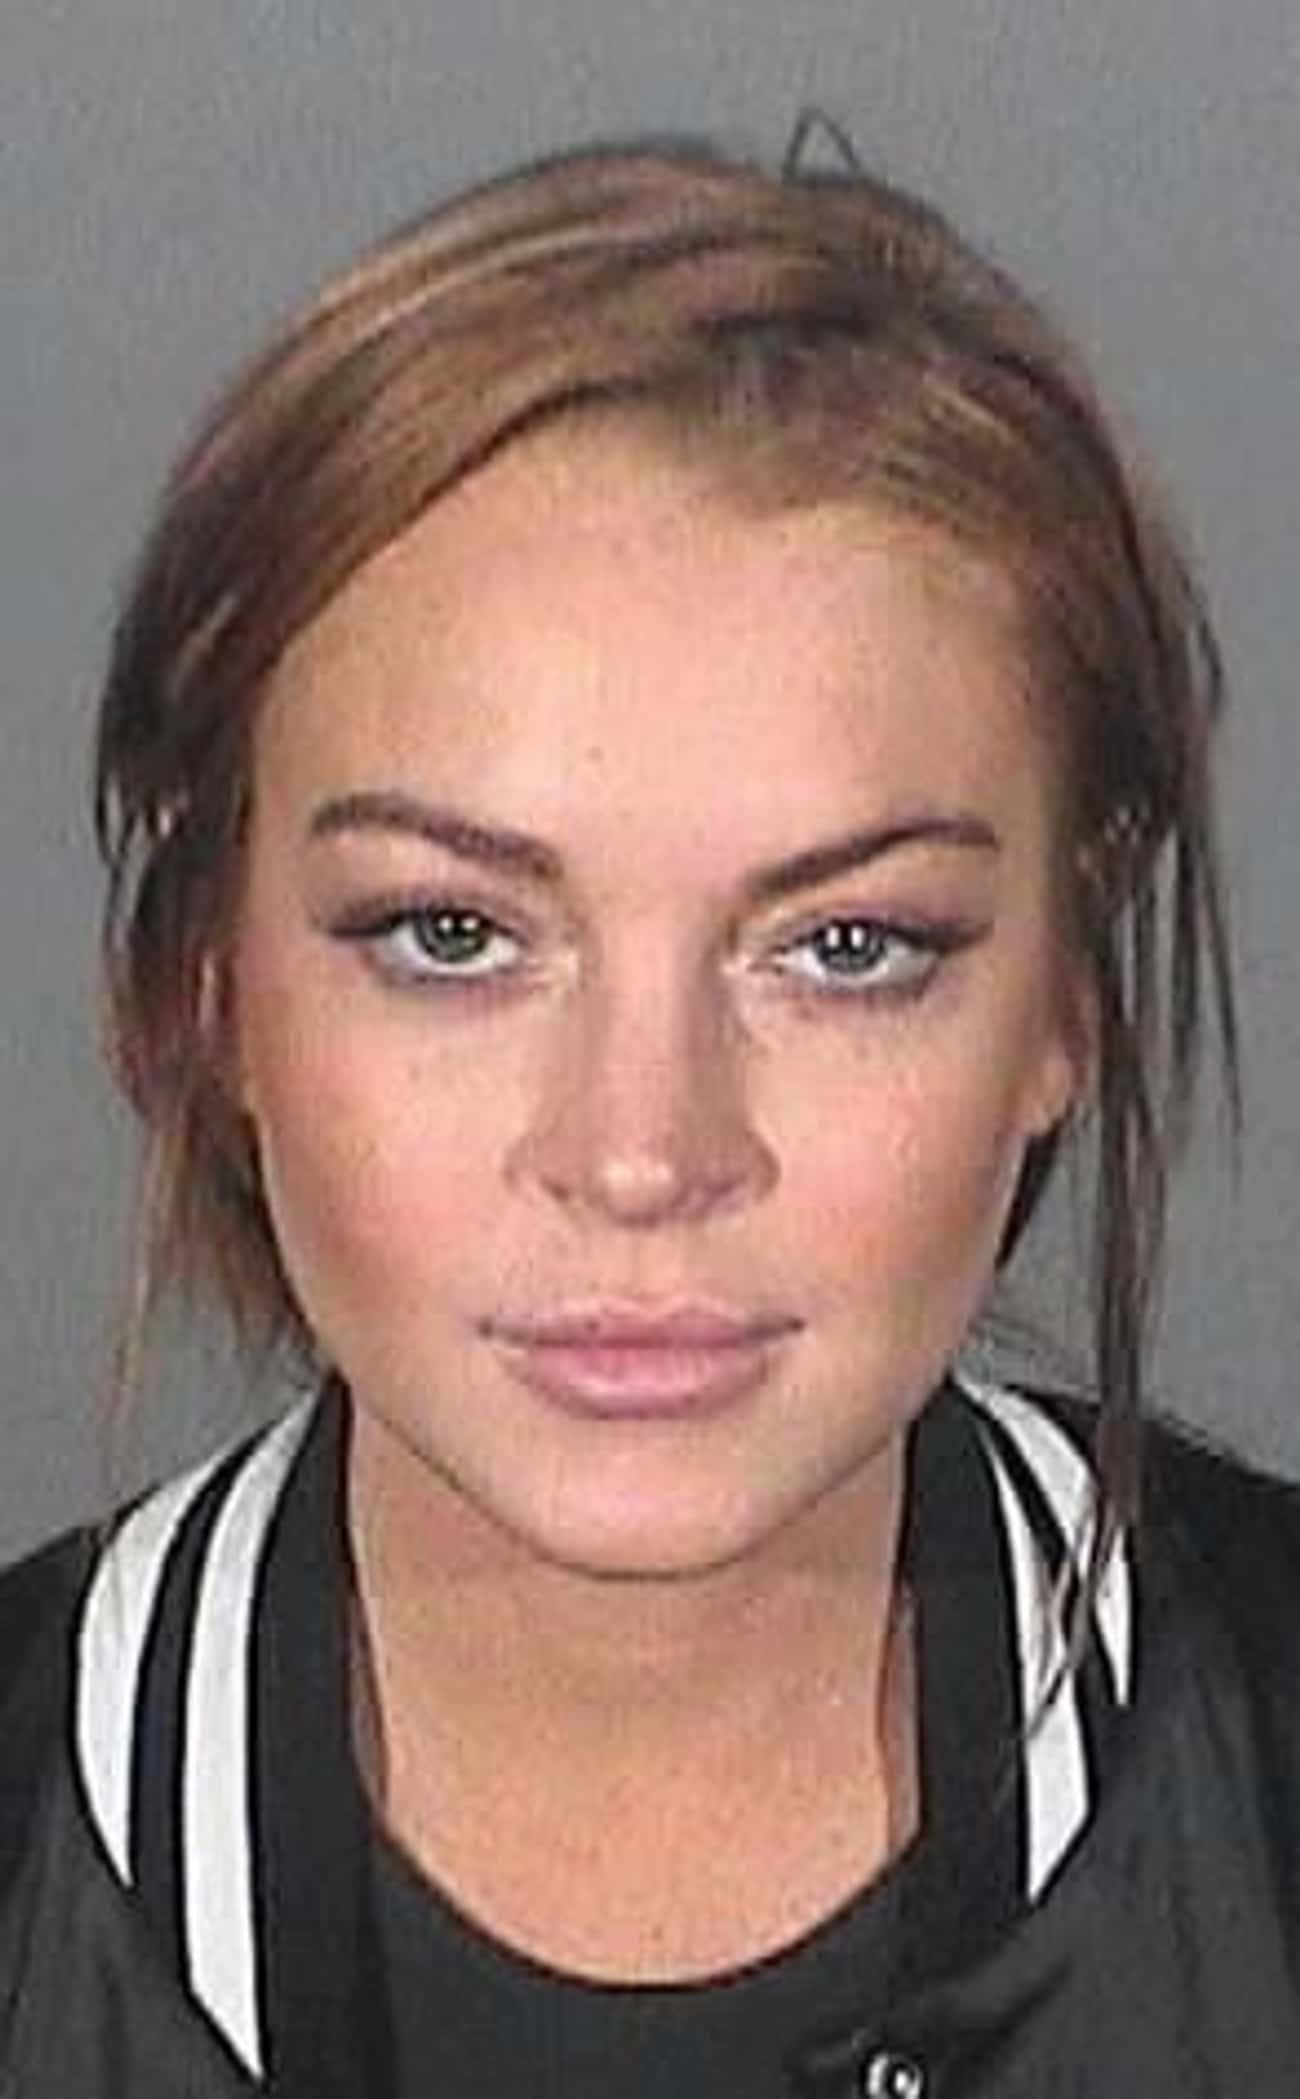 Lindsay Lohan Mugshot - March 2013